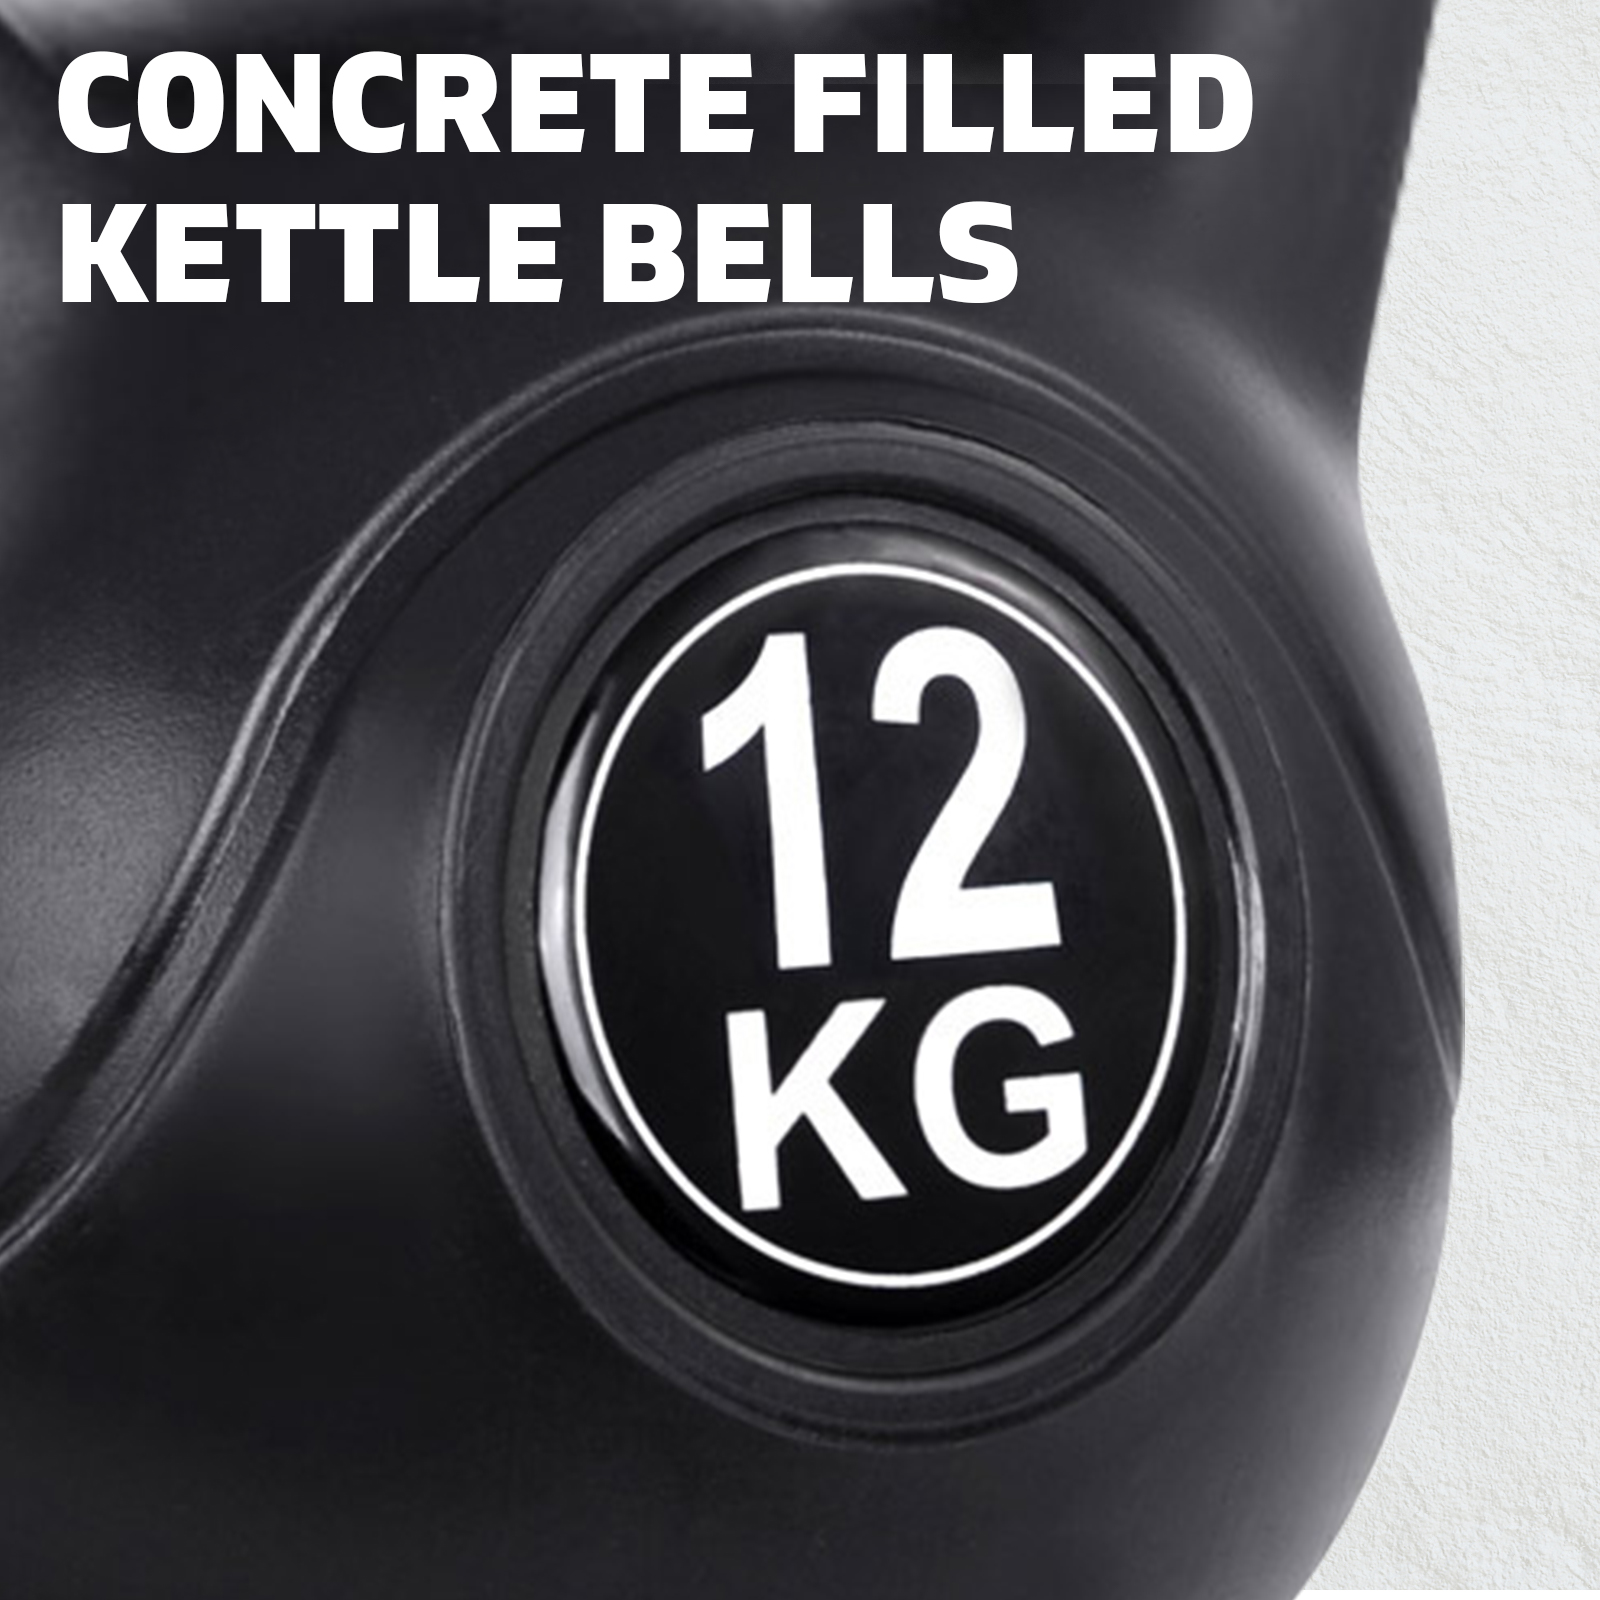 12kg Kettlebells Fitness Exercise Kit Home Gym Workout - Black